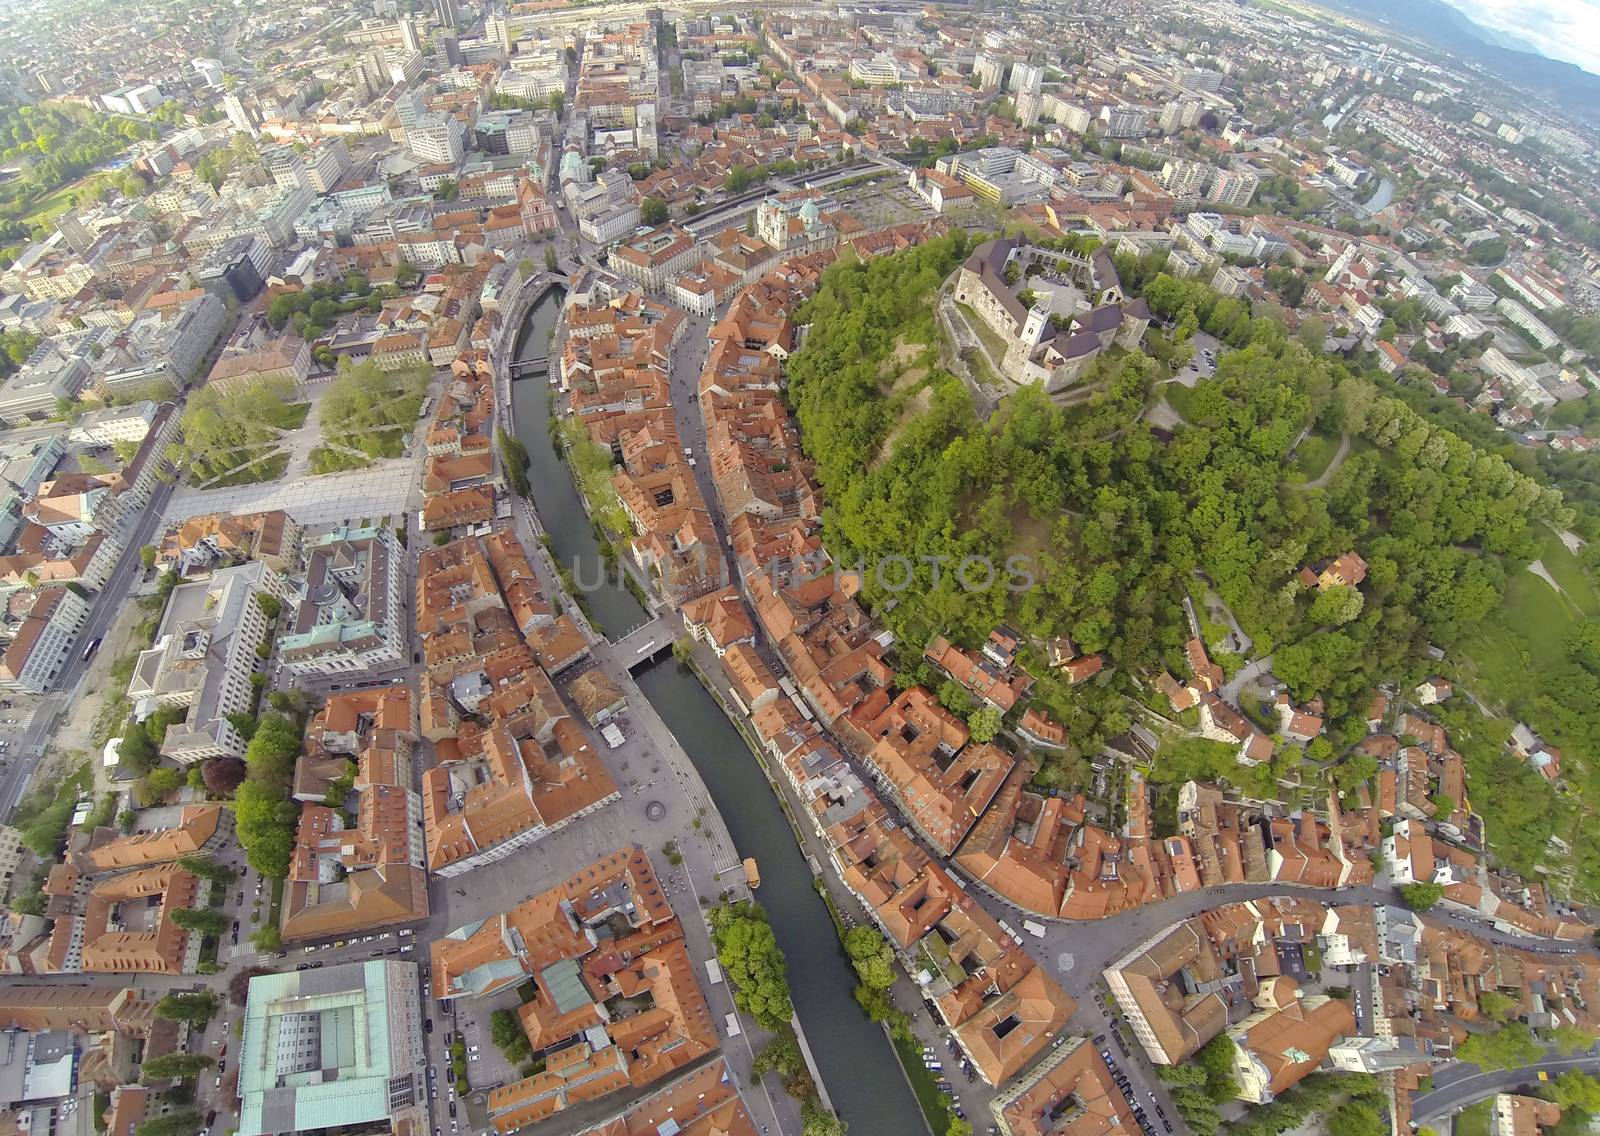 Ljubljana, the capital of Slovenia by Aarstudio